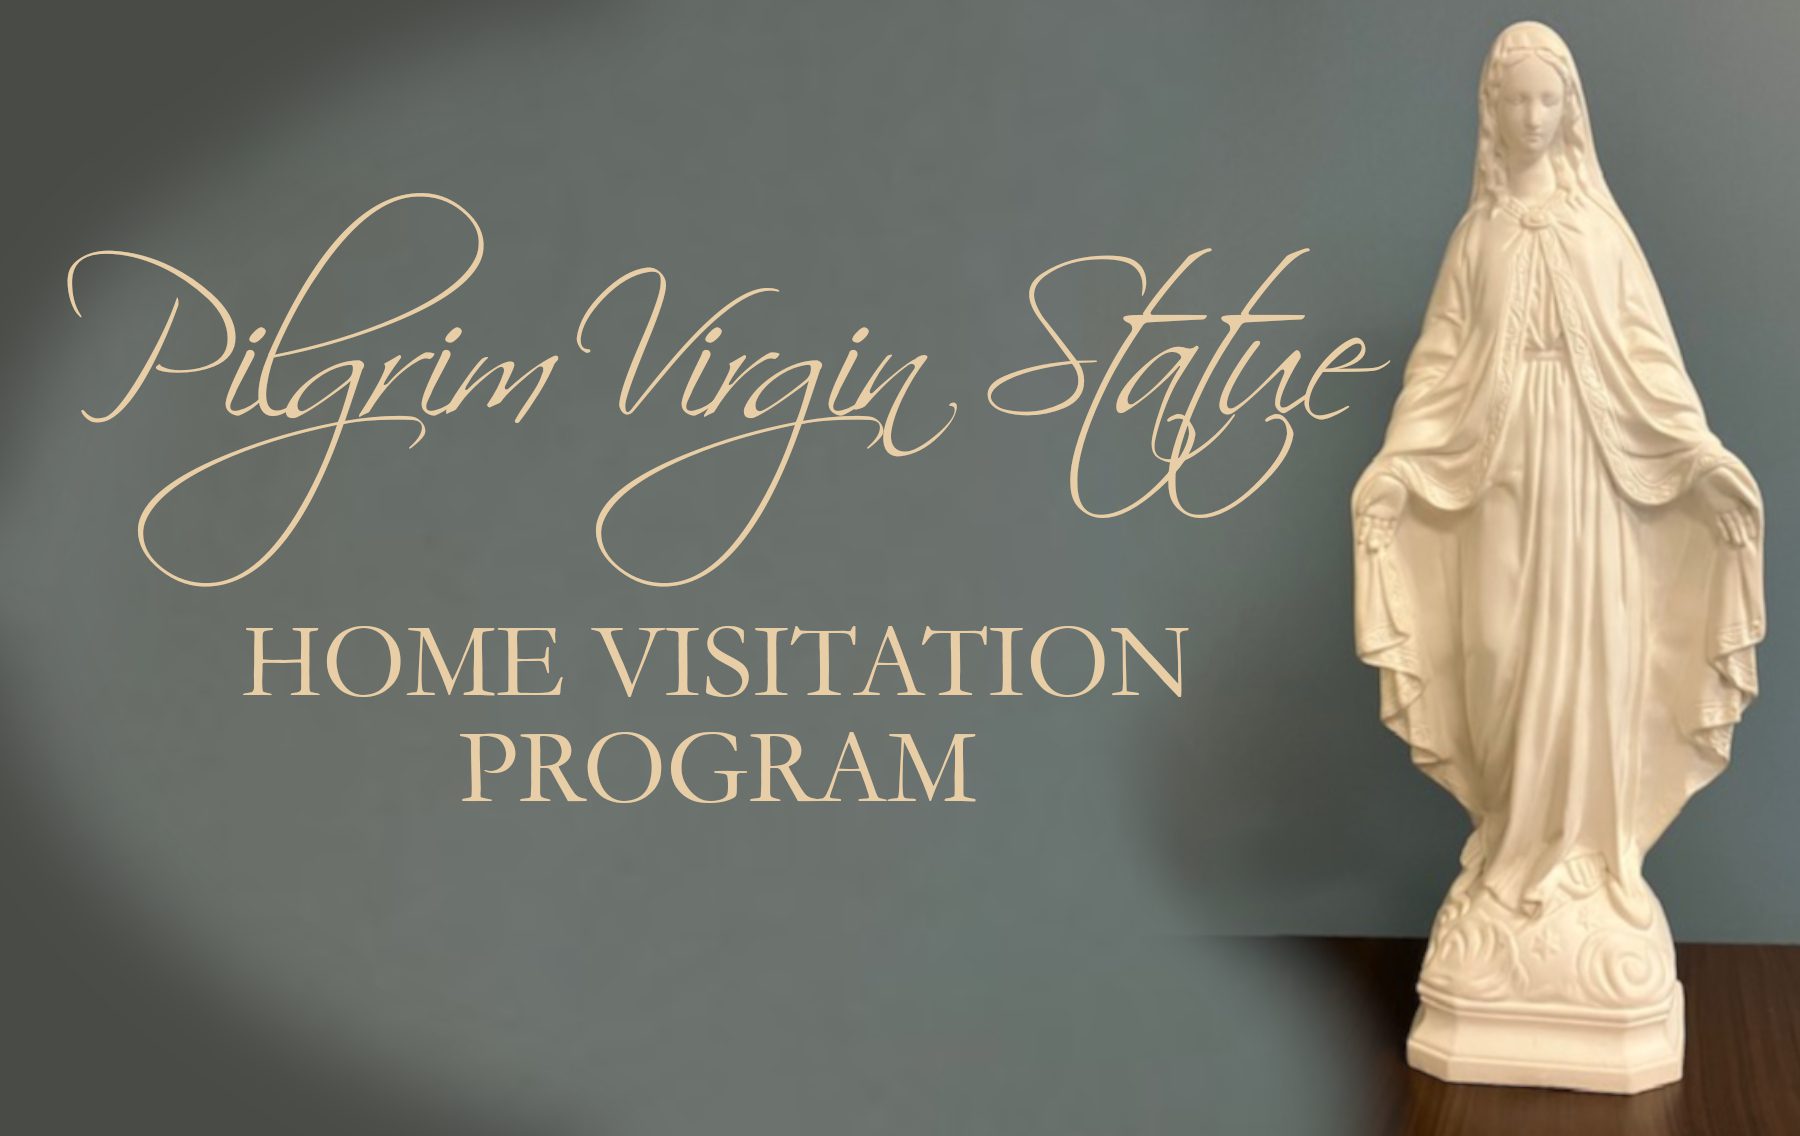 Pilgrim Virgin Statue Home Visitation Program